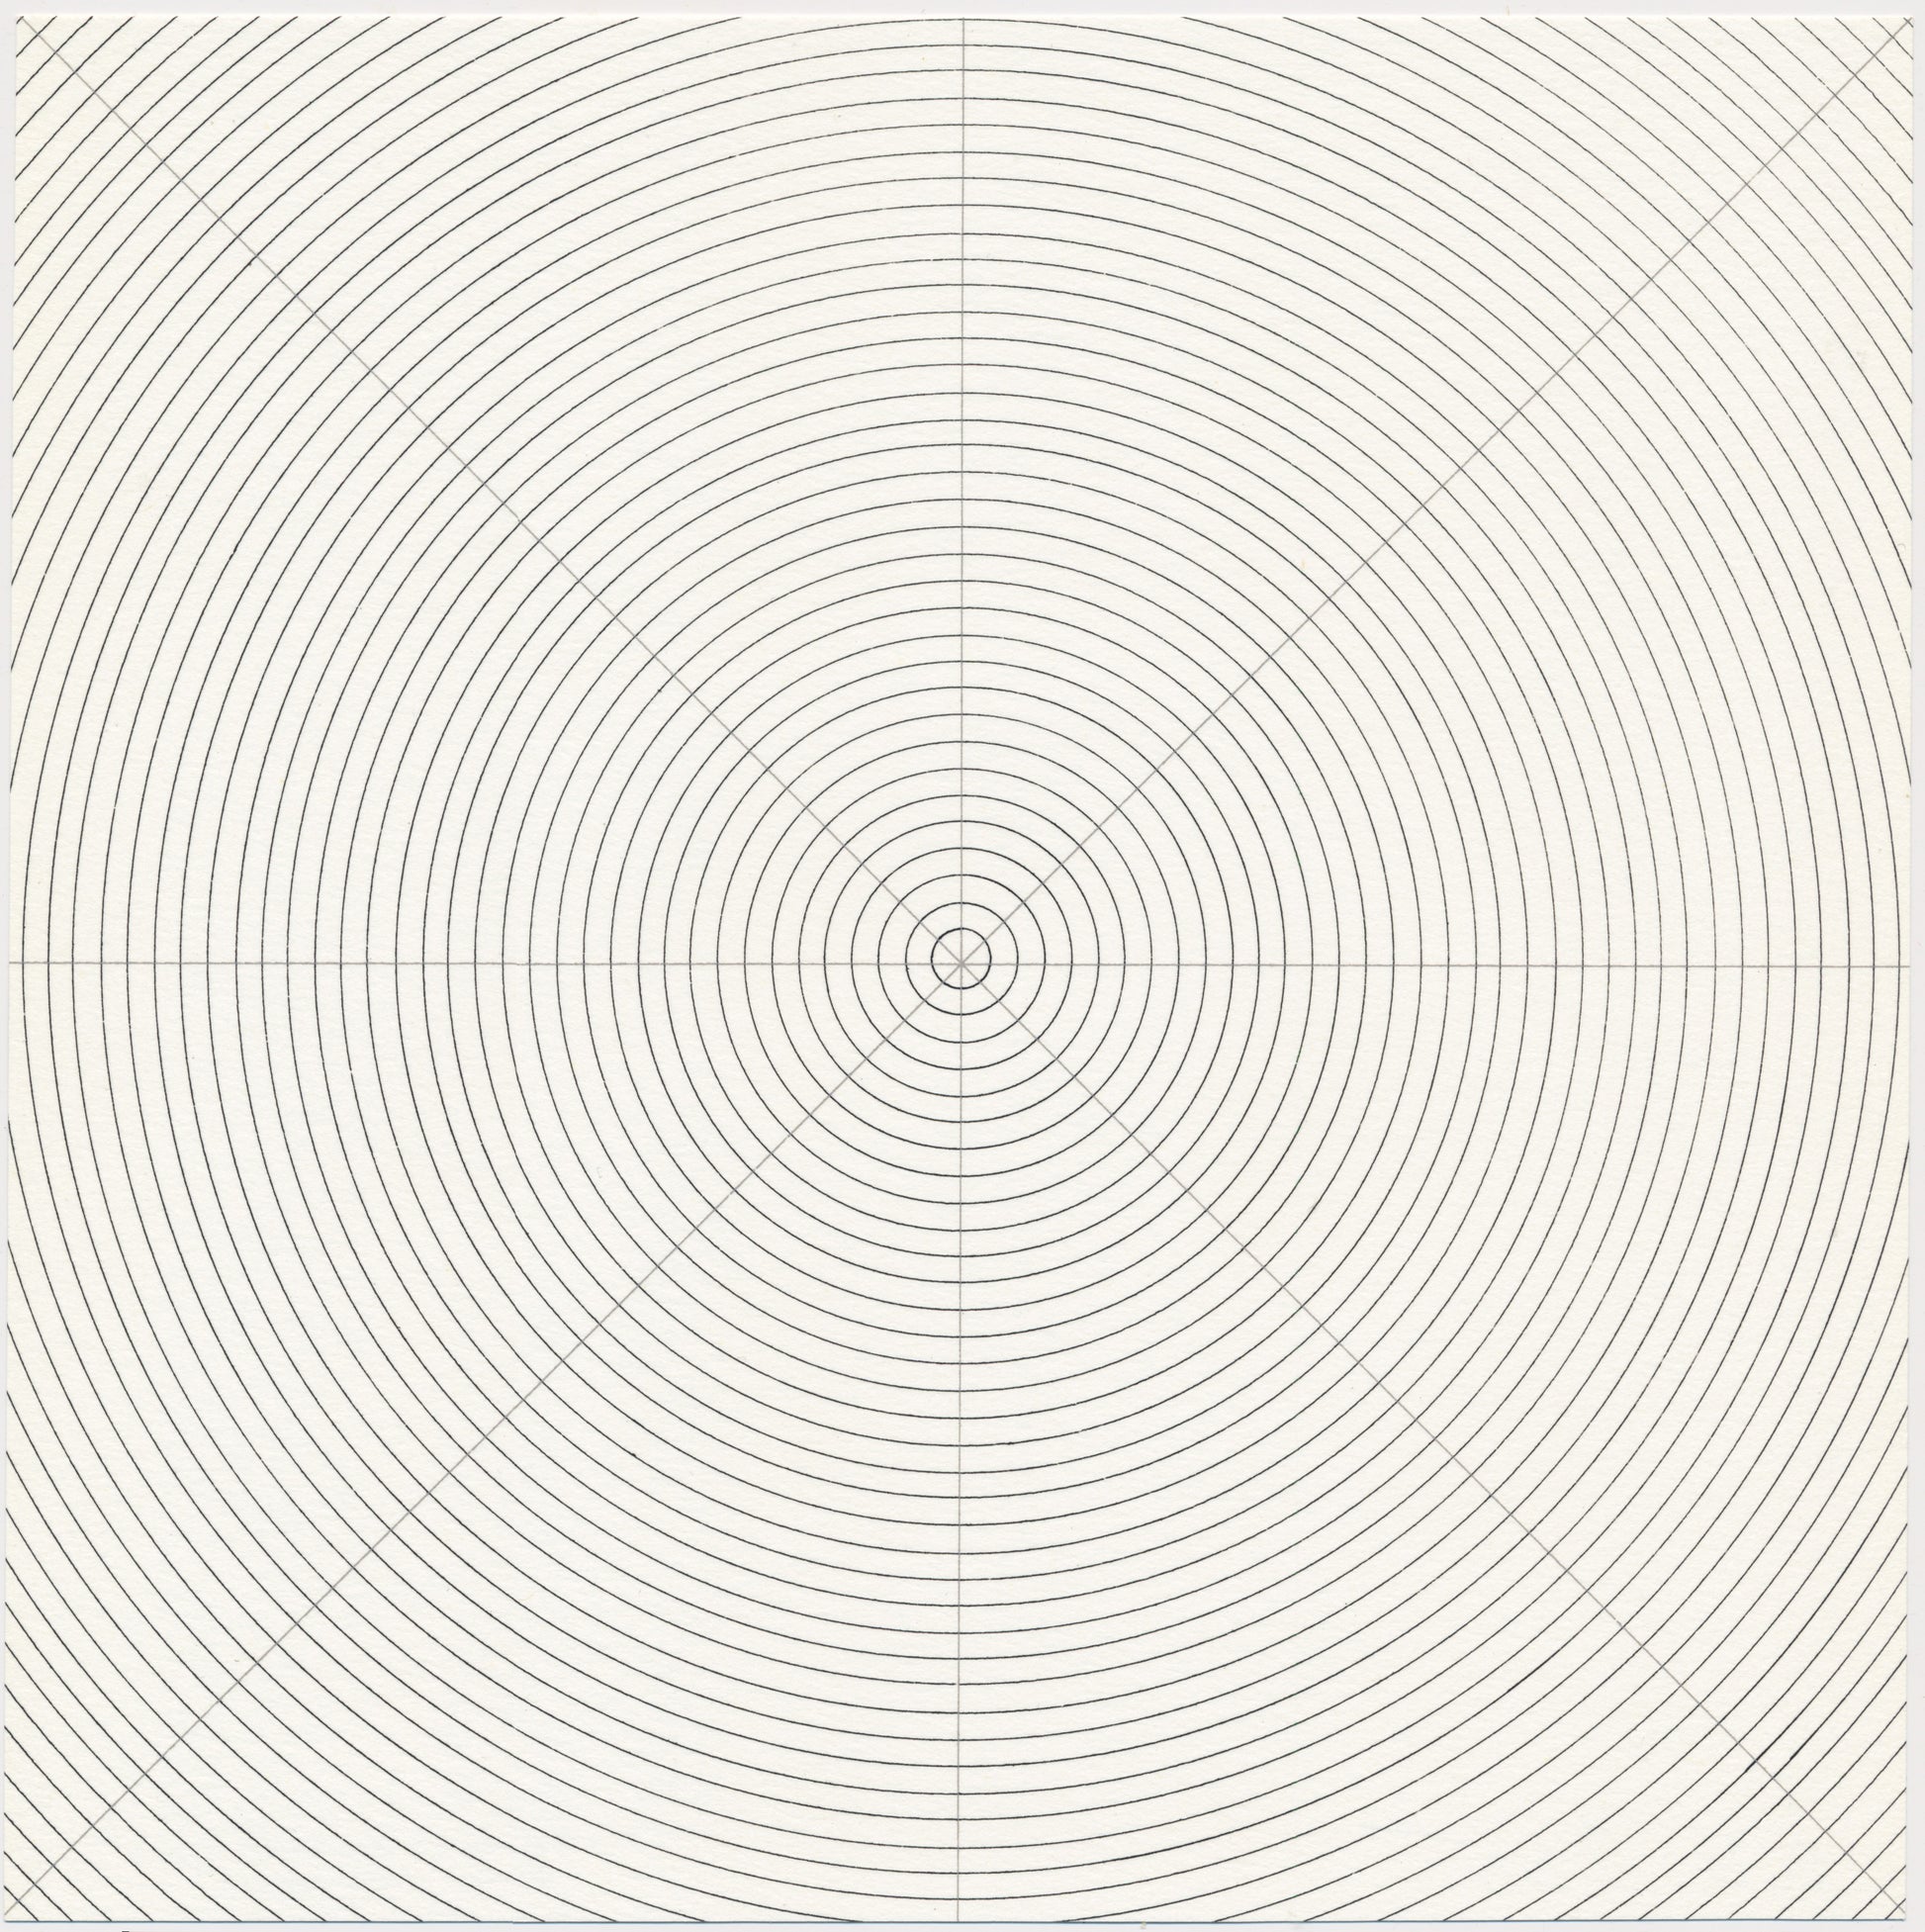 Sol Lewitt Circles, 1973 Lithograph full sheet